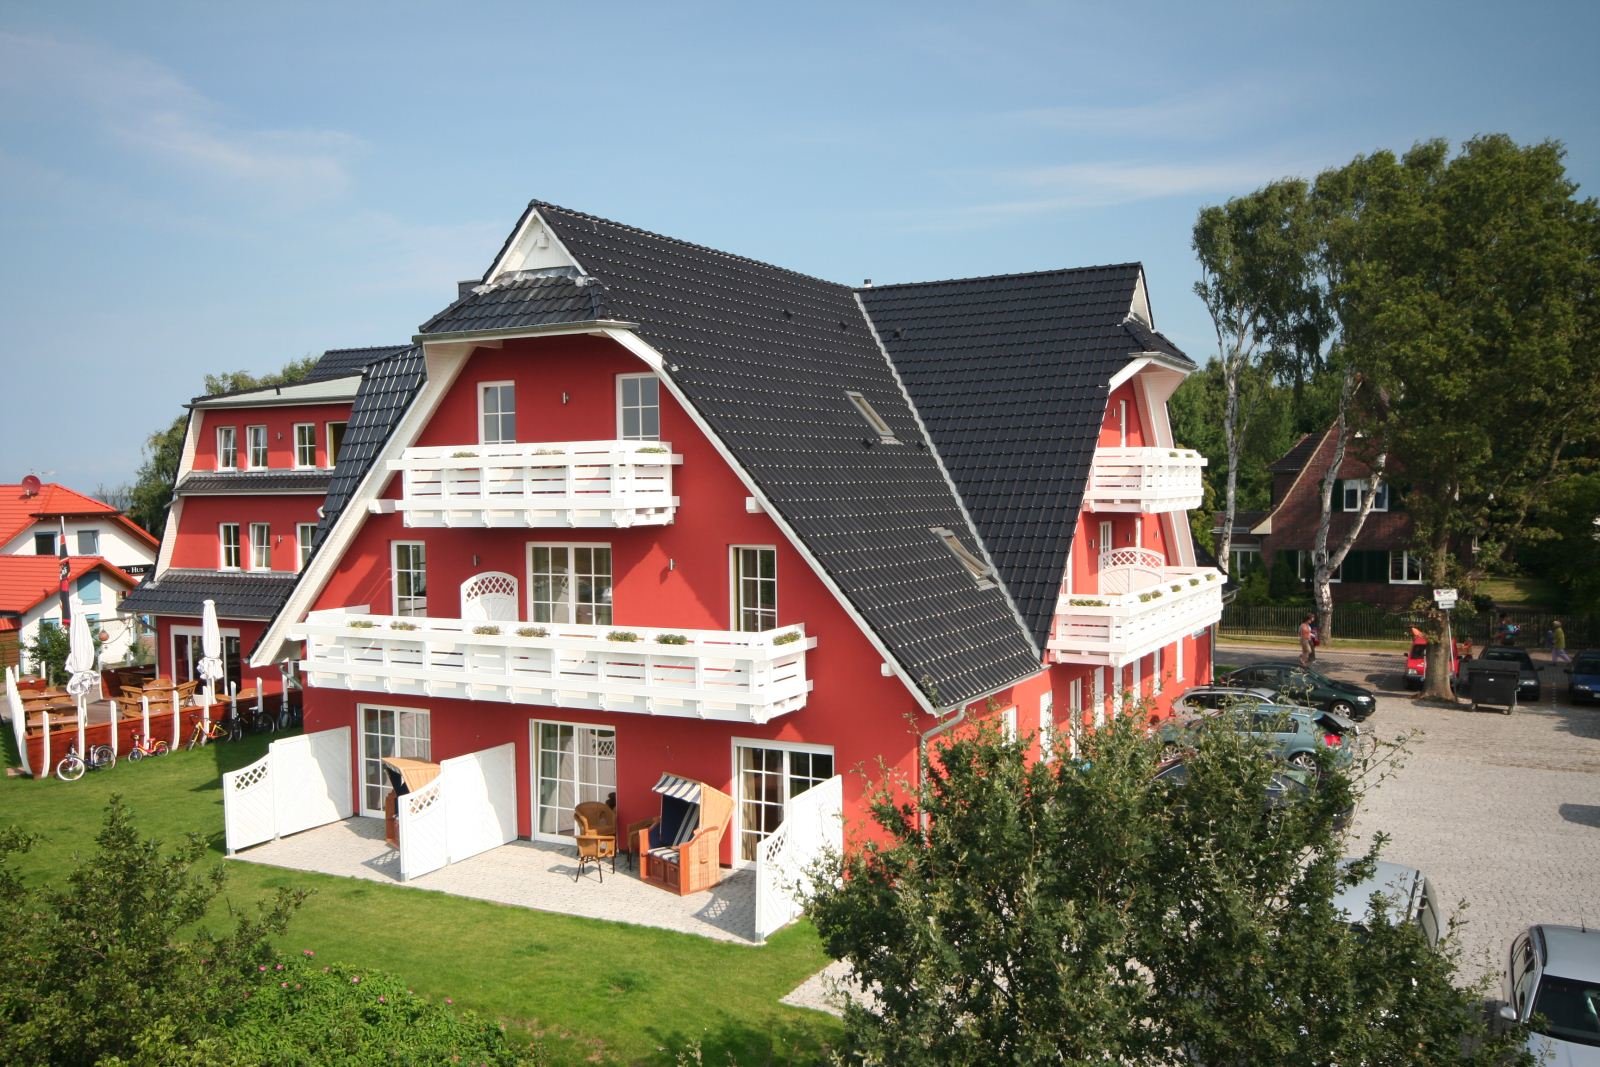 6 Tage Kaminknistern Strandhotel Deichgraf (4 Sterne) in Ostseeheilbad Graal Müritz, Mecklenburg-Vorpommern inkl. Halbpension